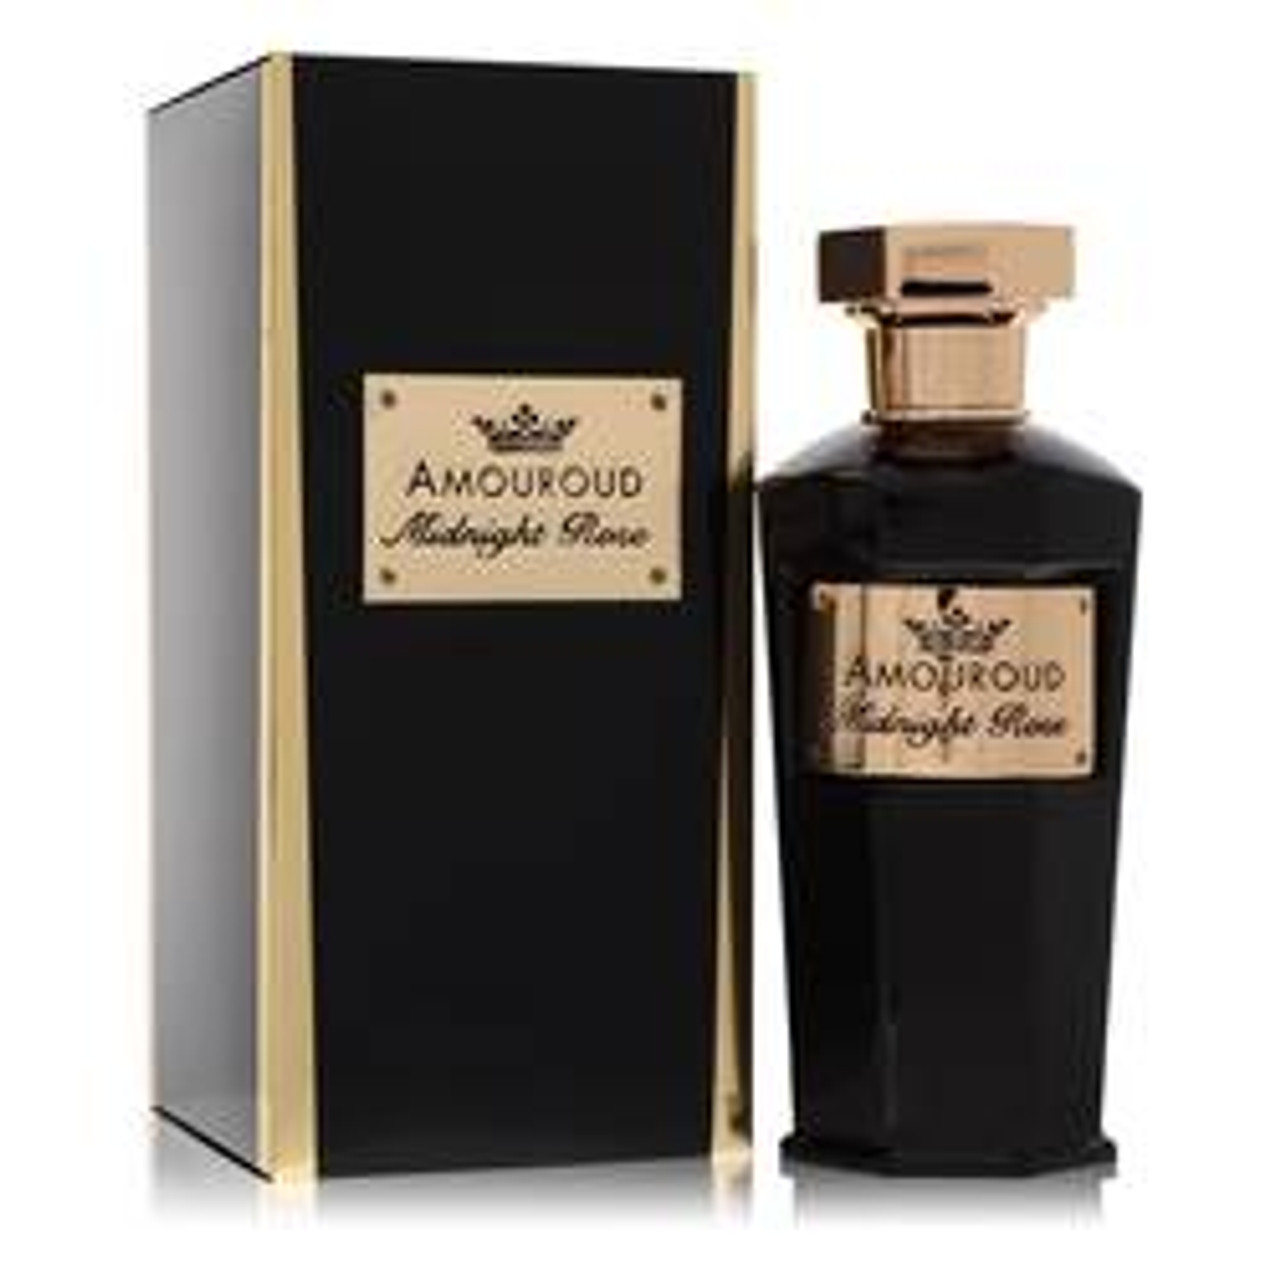 Midnight Rose Perfume By Amouroud Eau De Parfum Spray (Unisex) 3.4 oz for Women - *Pre-Order